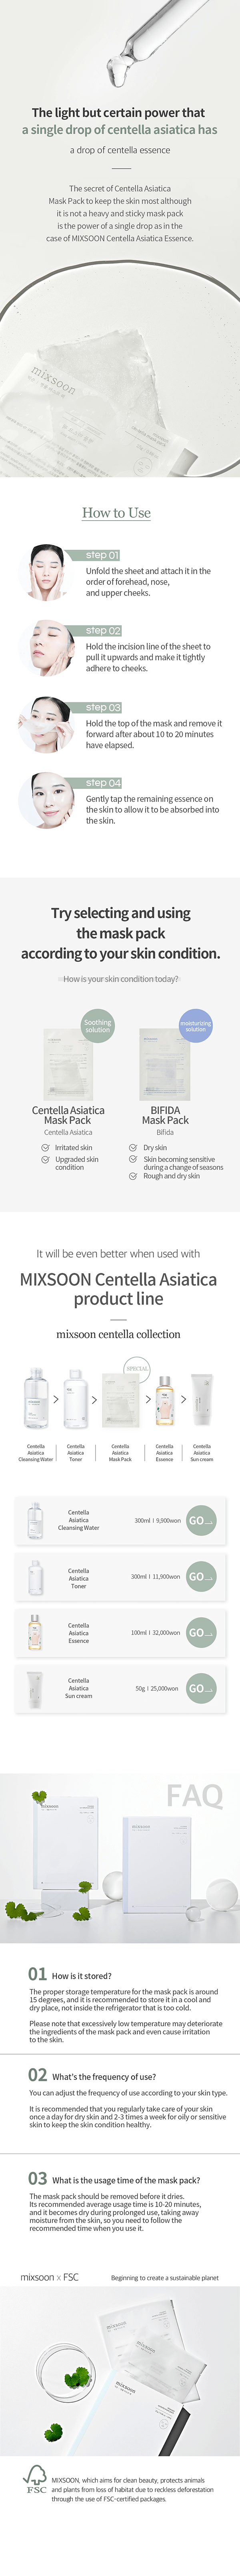 Centella Asiatica Mask 5pcs Set